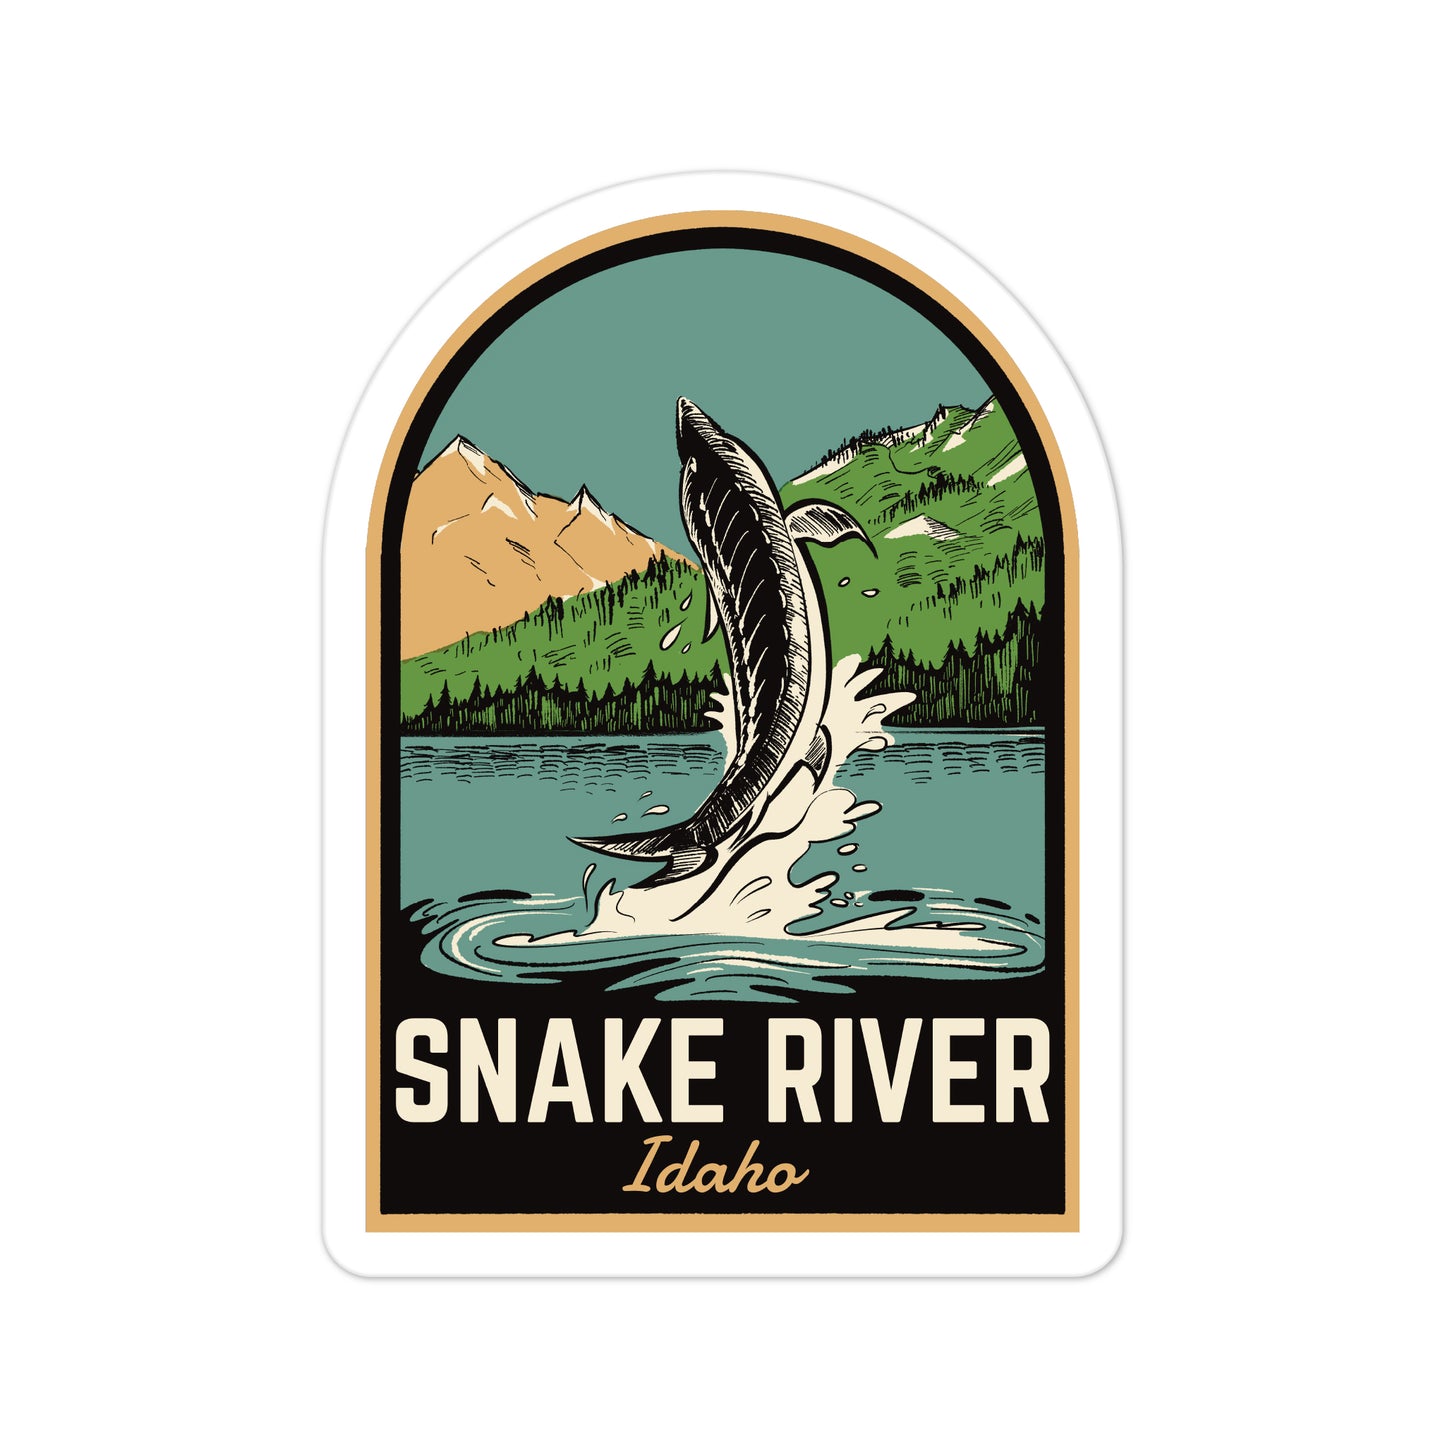 A sticker of Snake River Idaho